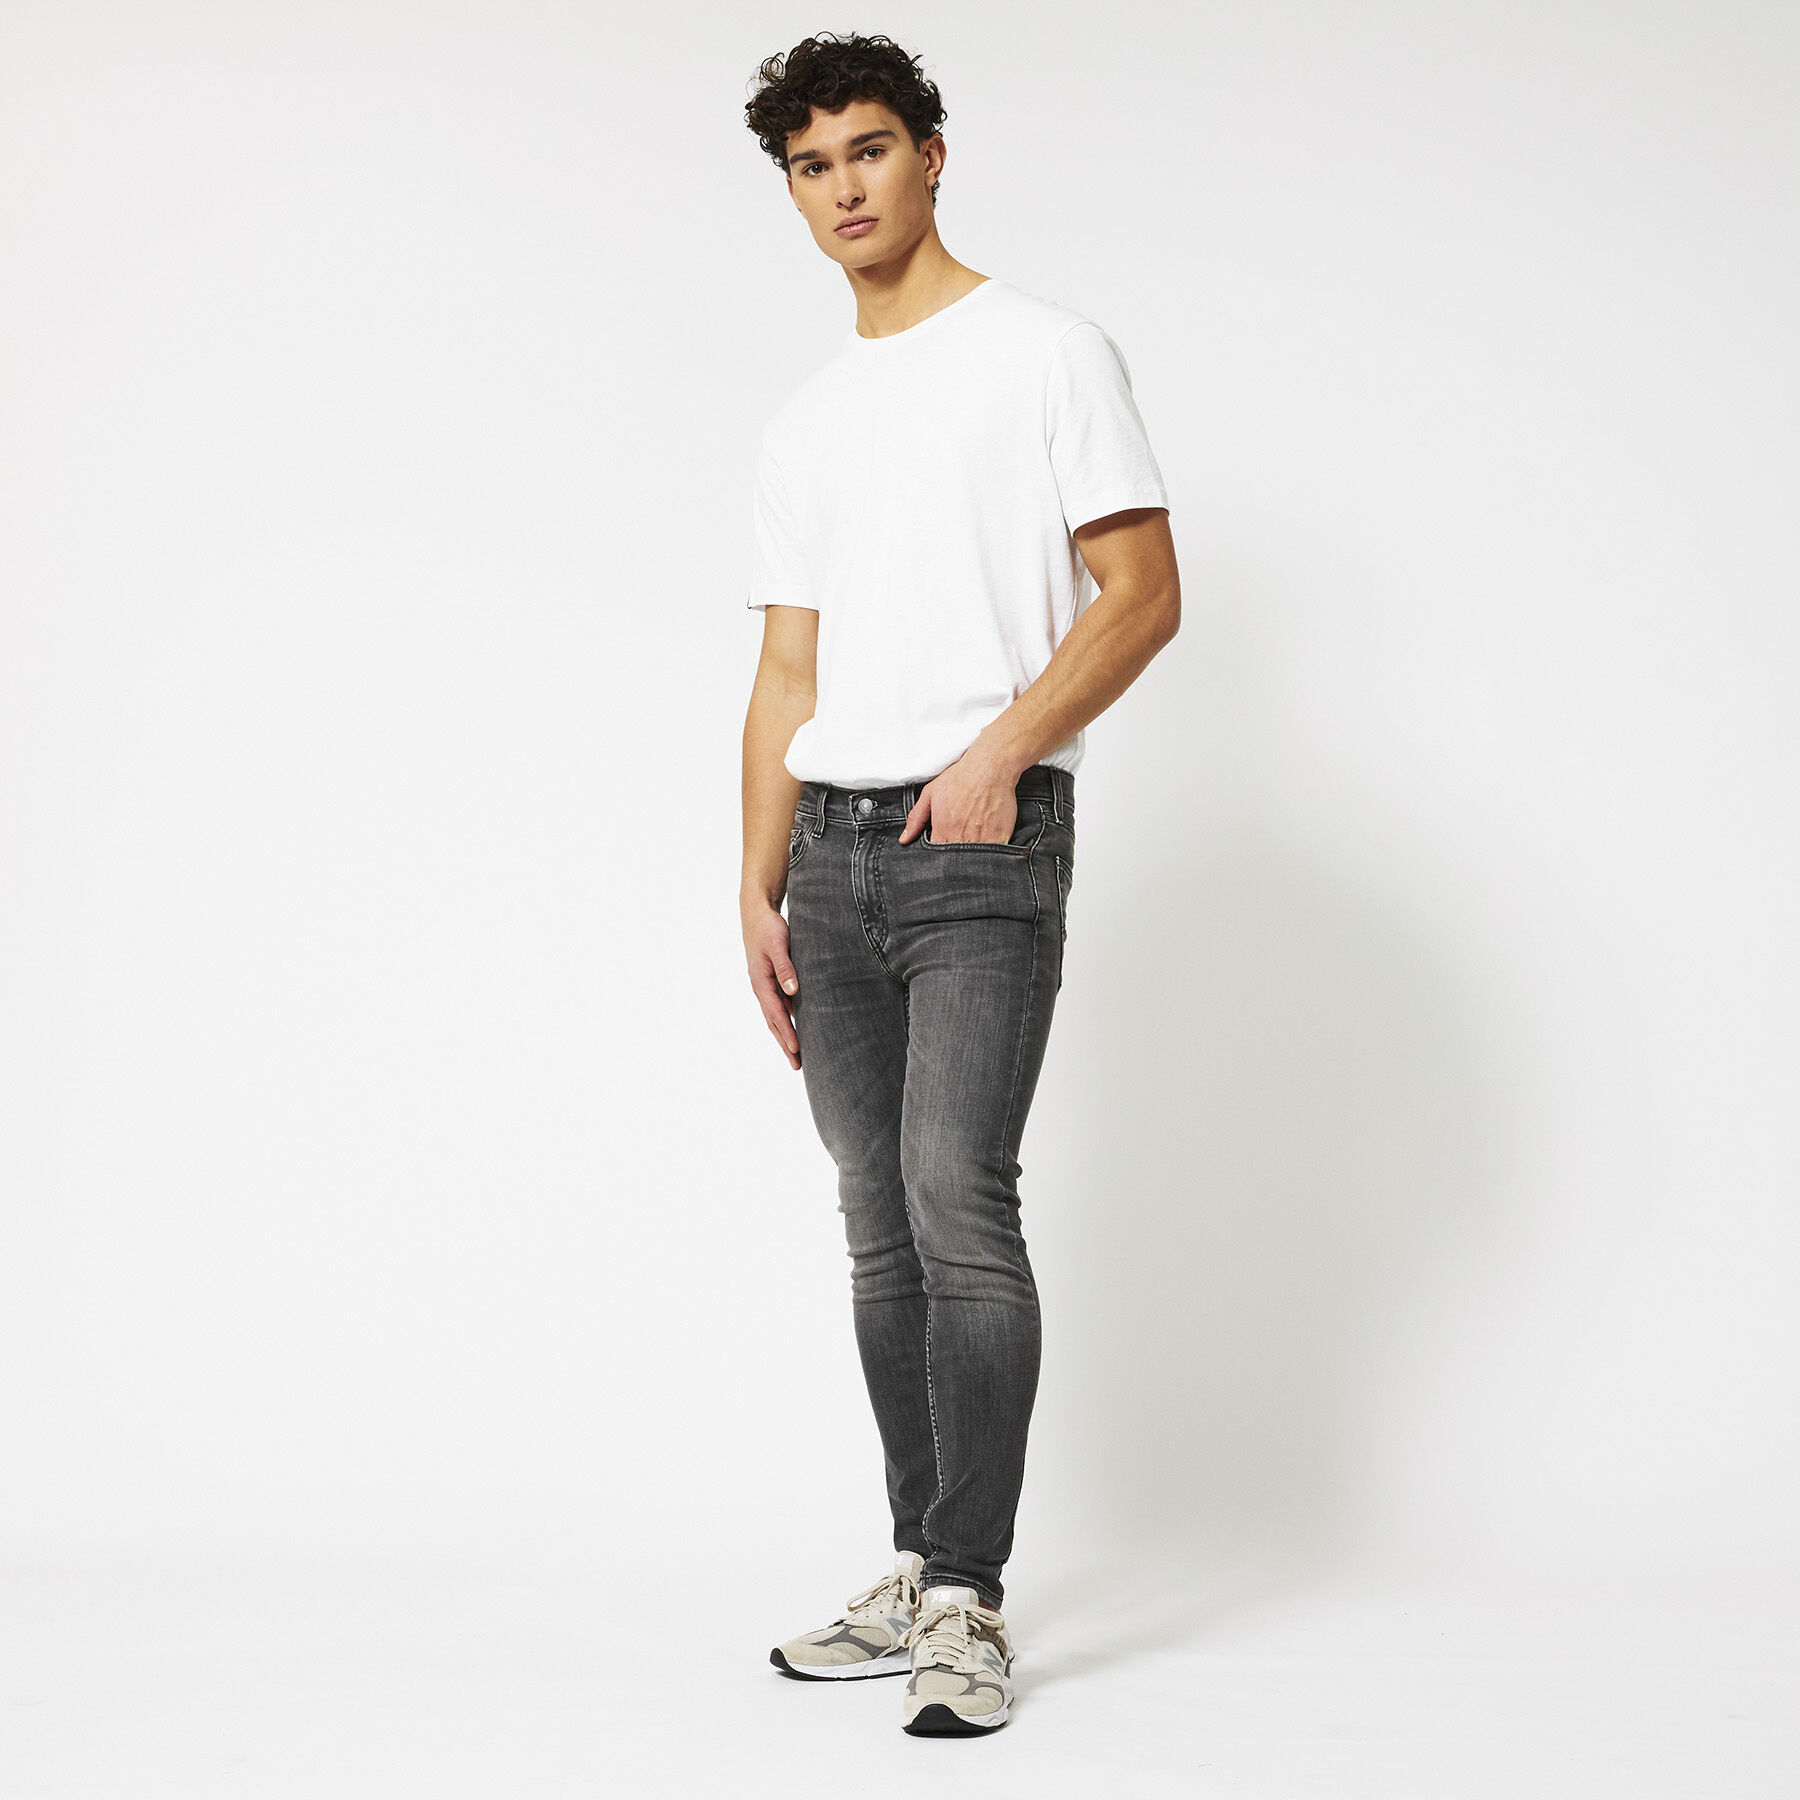 levis jeans 519 slim